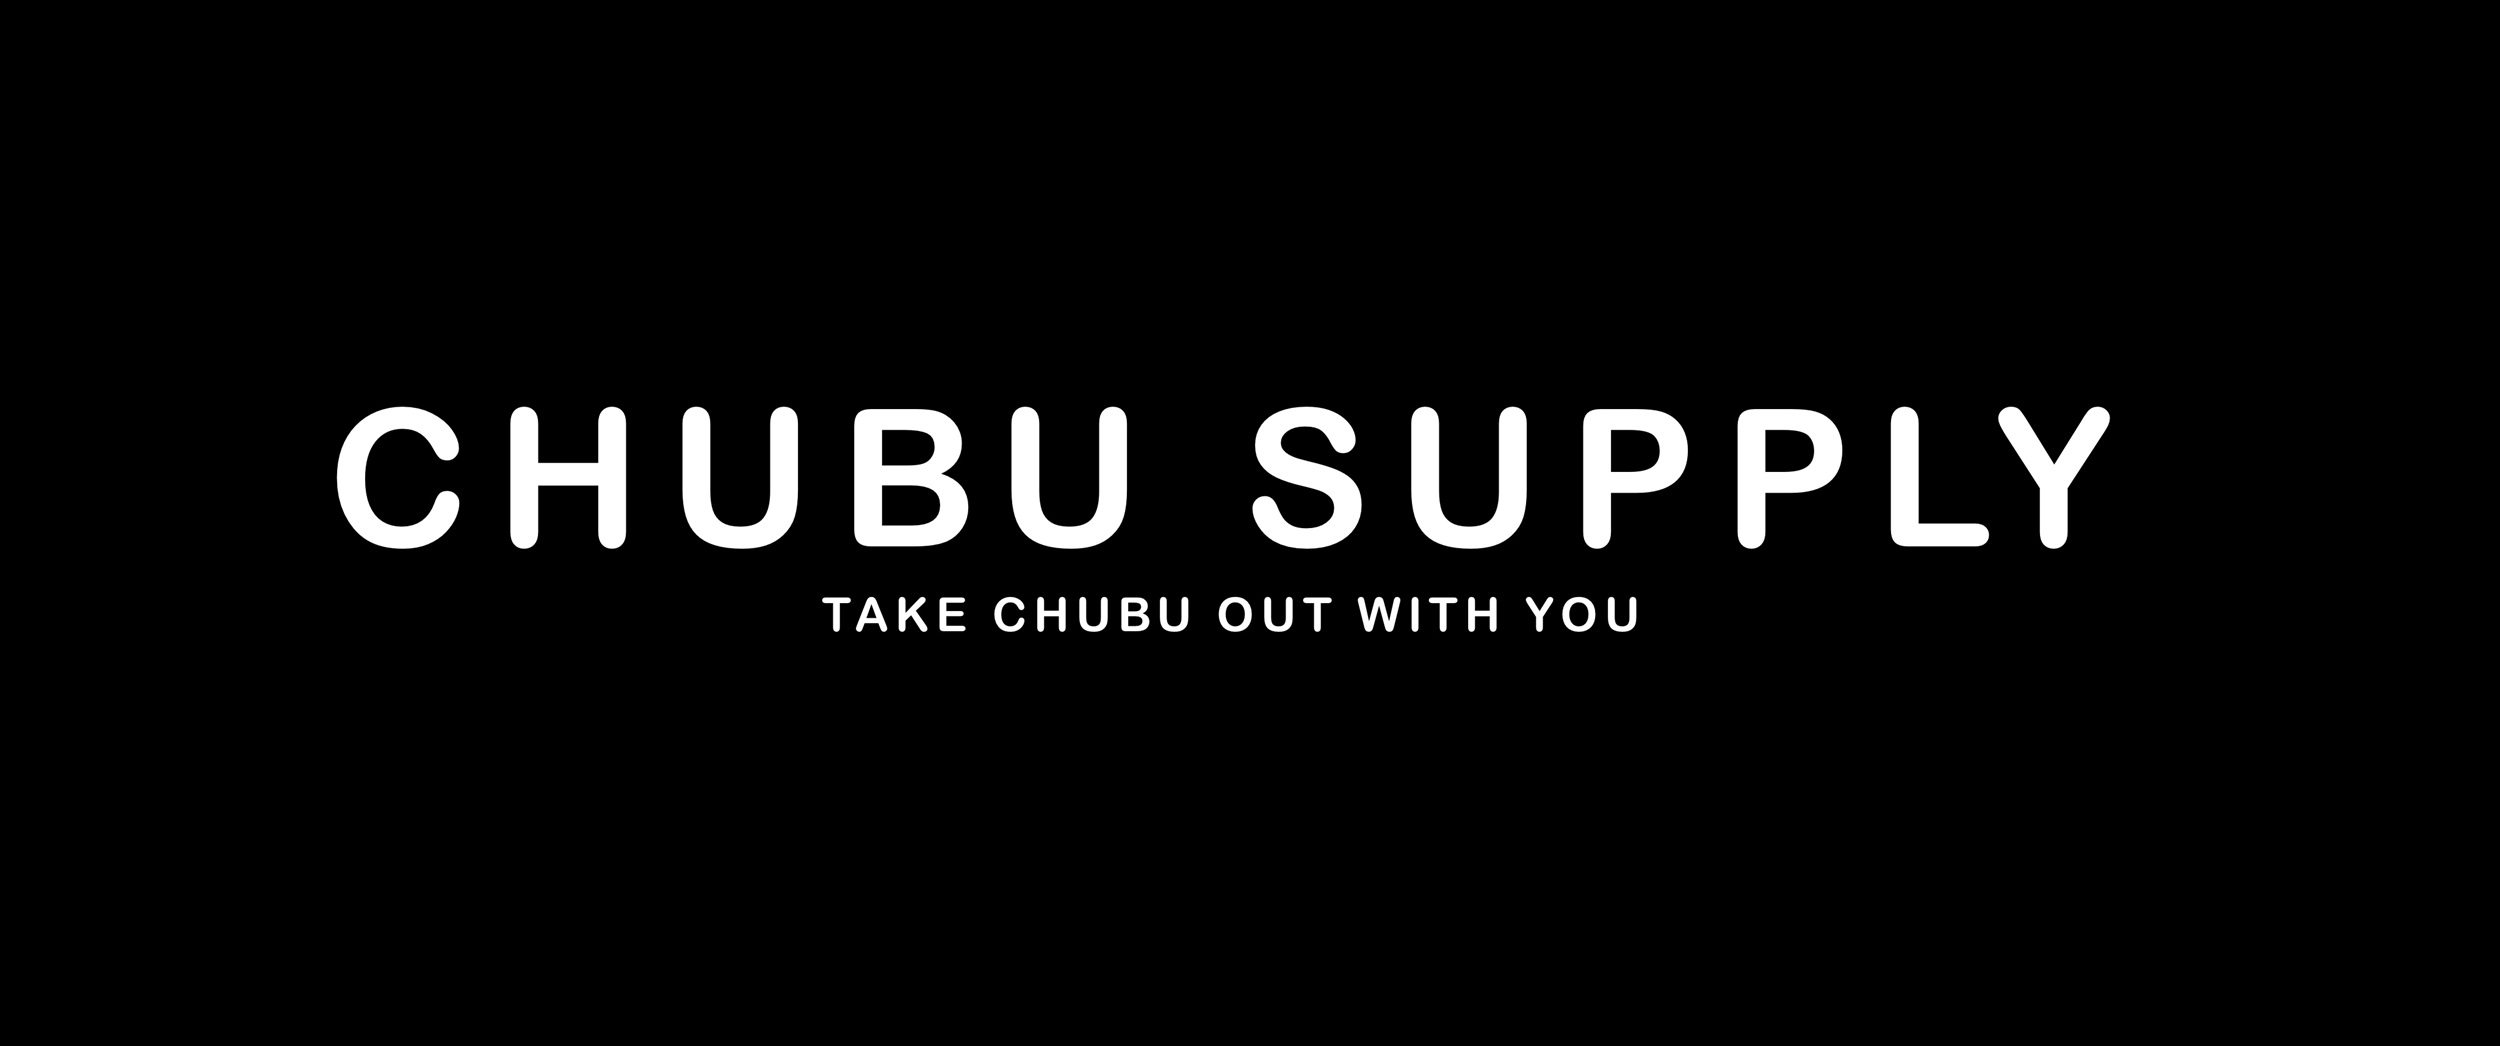 Chubu Supply 